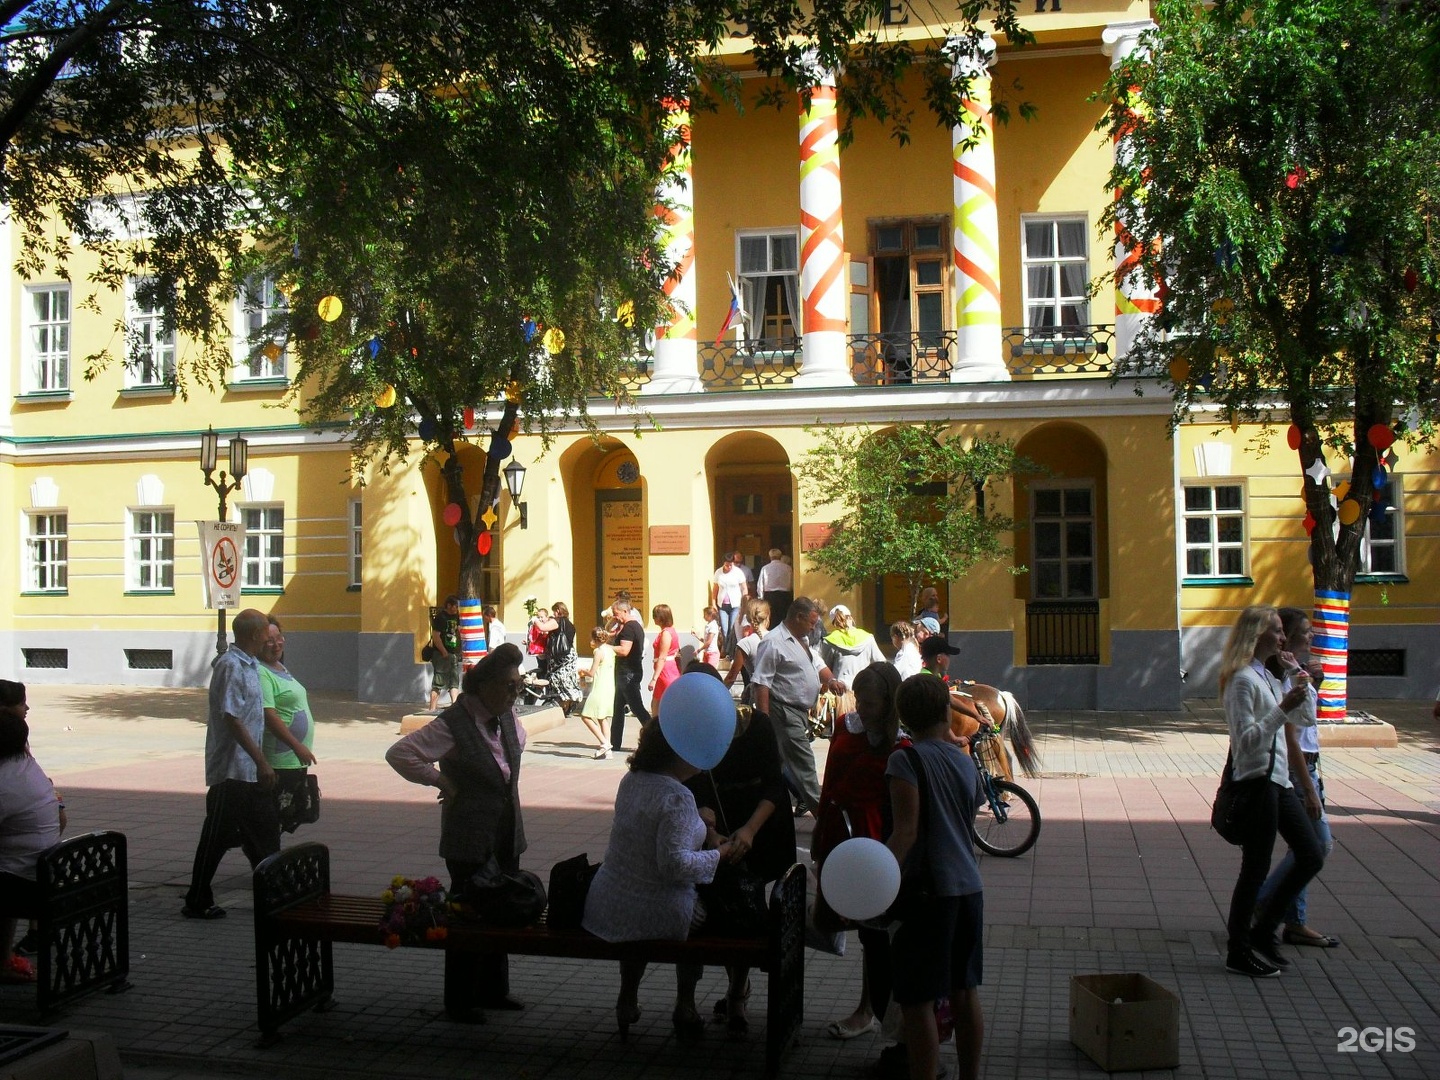 краеведческий музей оренбург